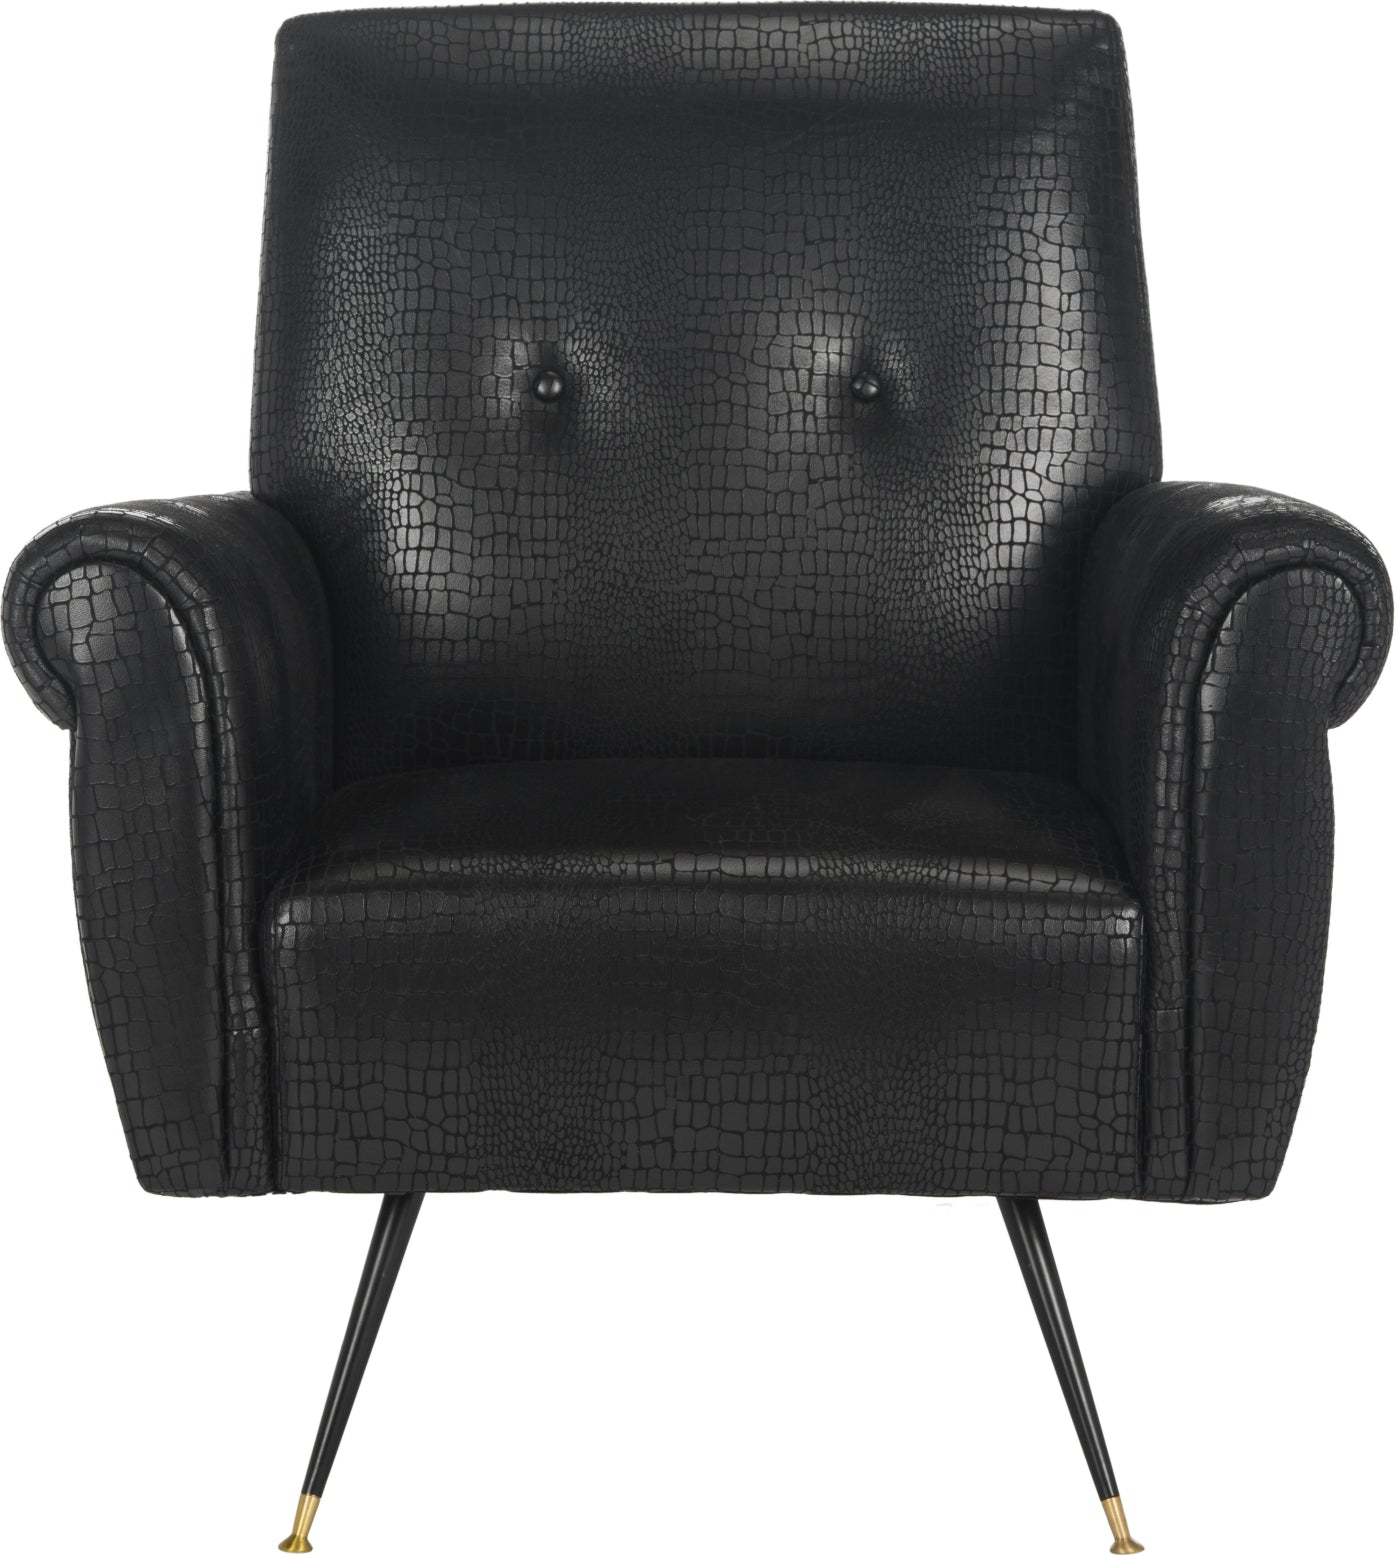 Safavieh Mira Retro Mid Century Faux Leather Accent Chair Black Furniture main image